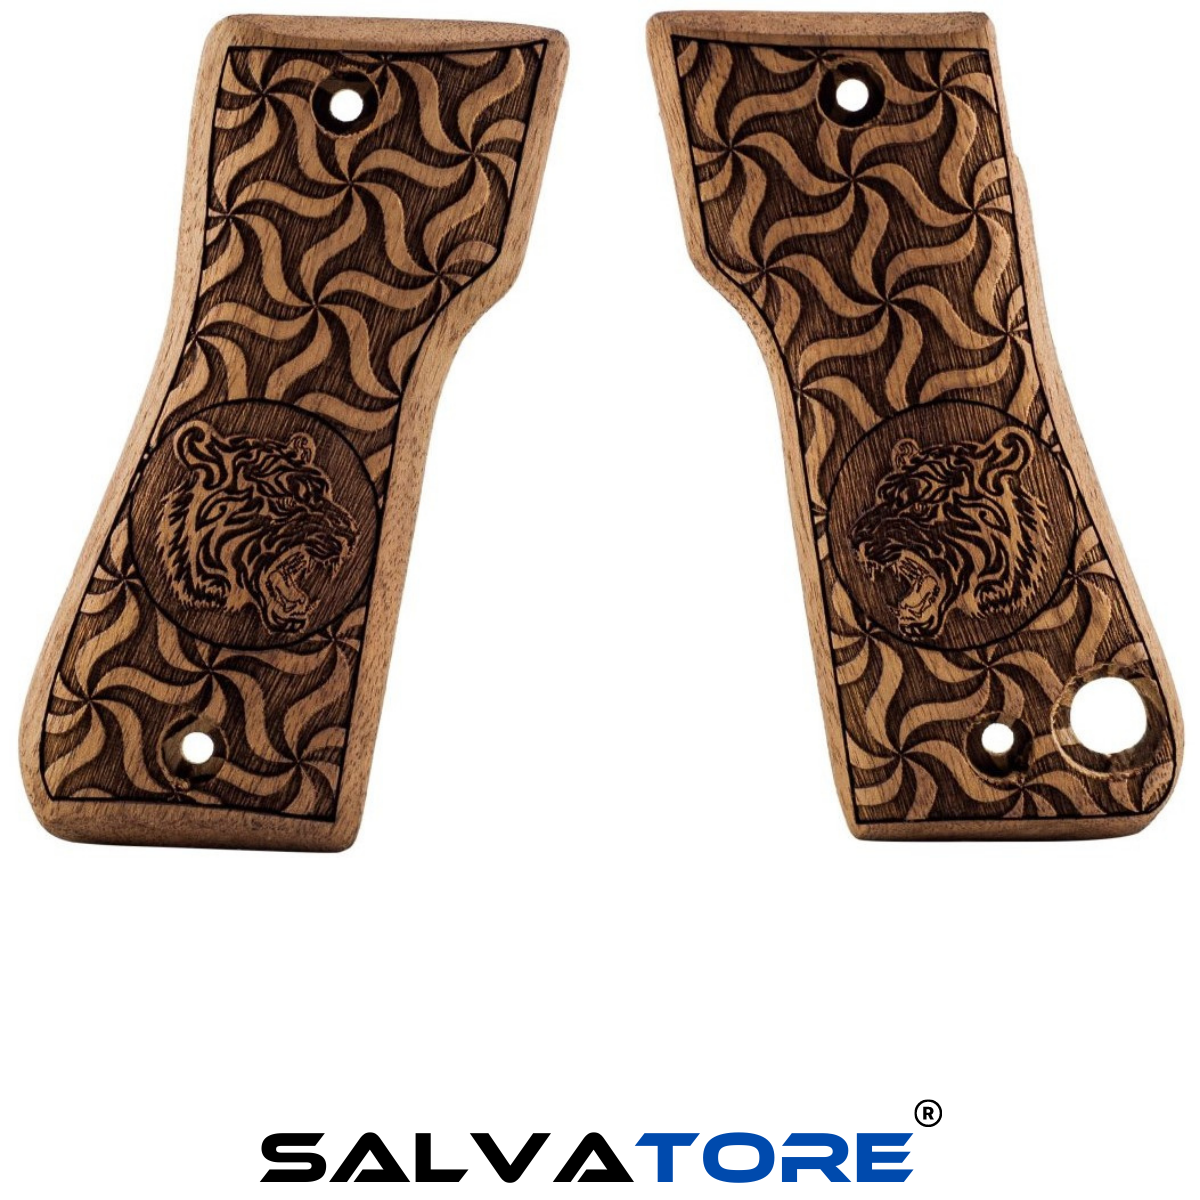 Salvatore Pistol Grips Revolver Grips For ASTRA MOD 800 CONDOR Handmade Walnut Gun Accessories Hunting Shooting